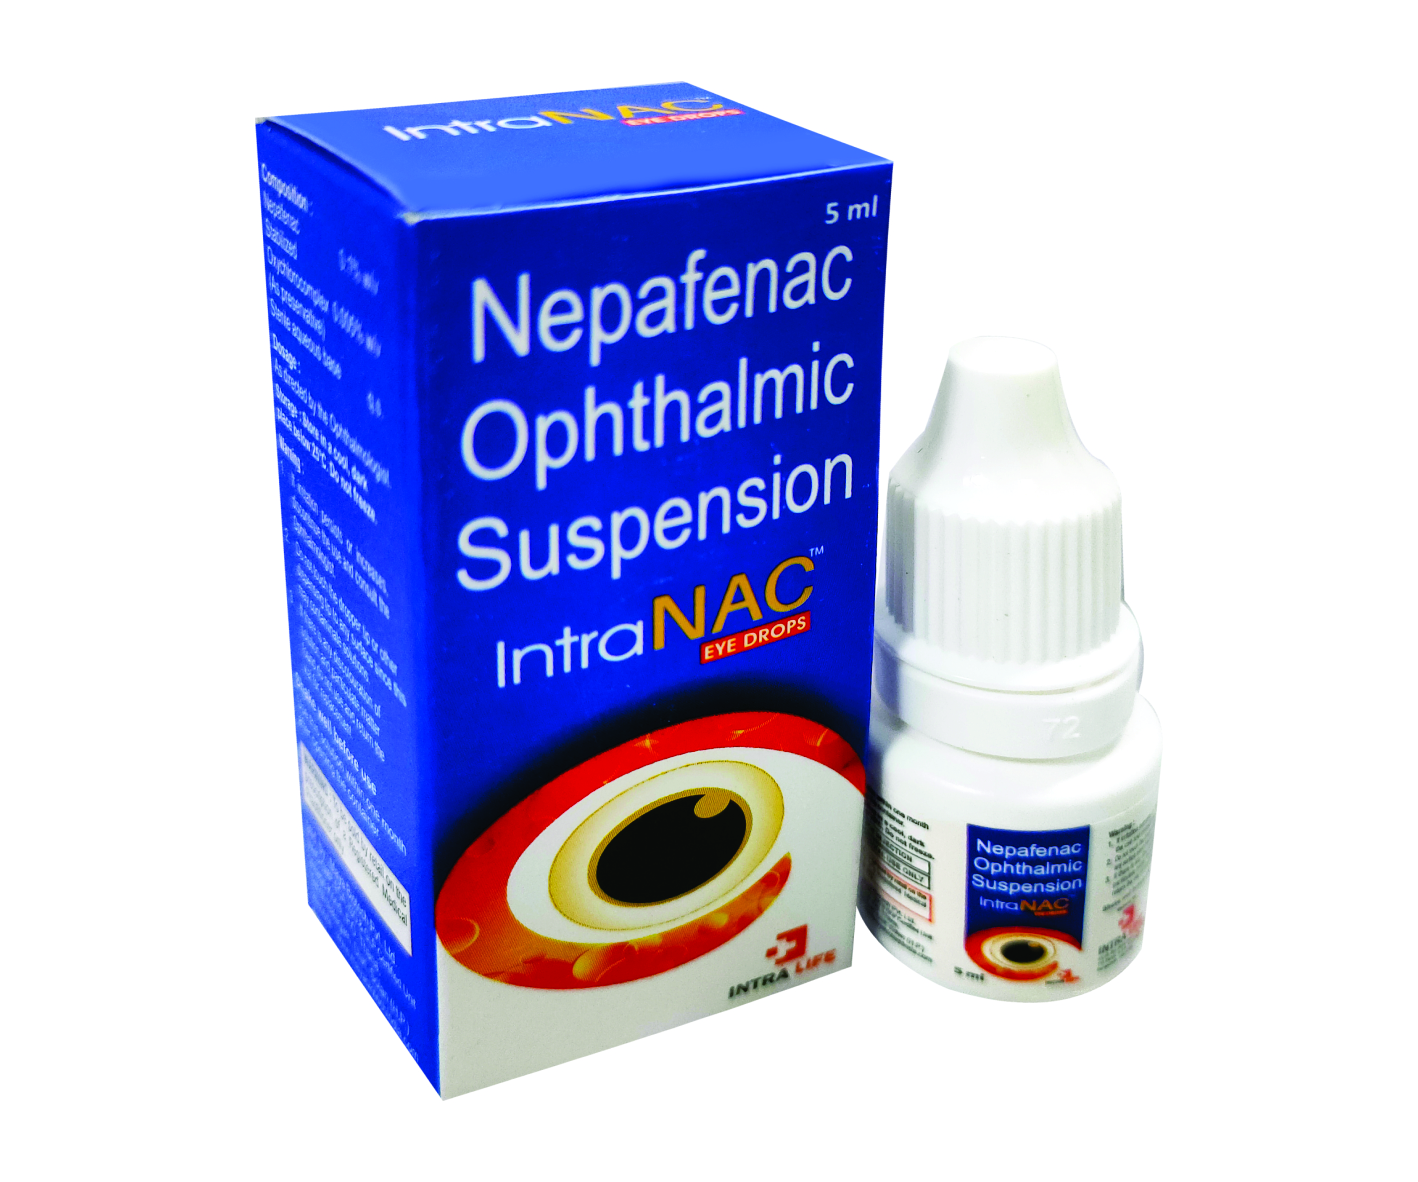 Ophthalmic PCD Pharma Companies in India